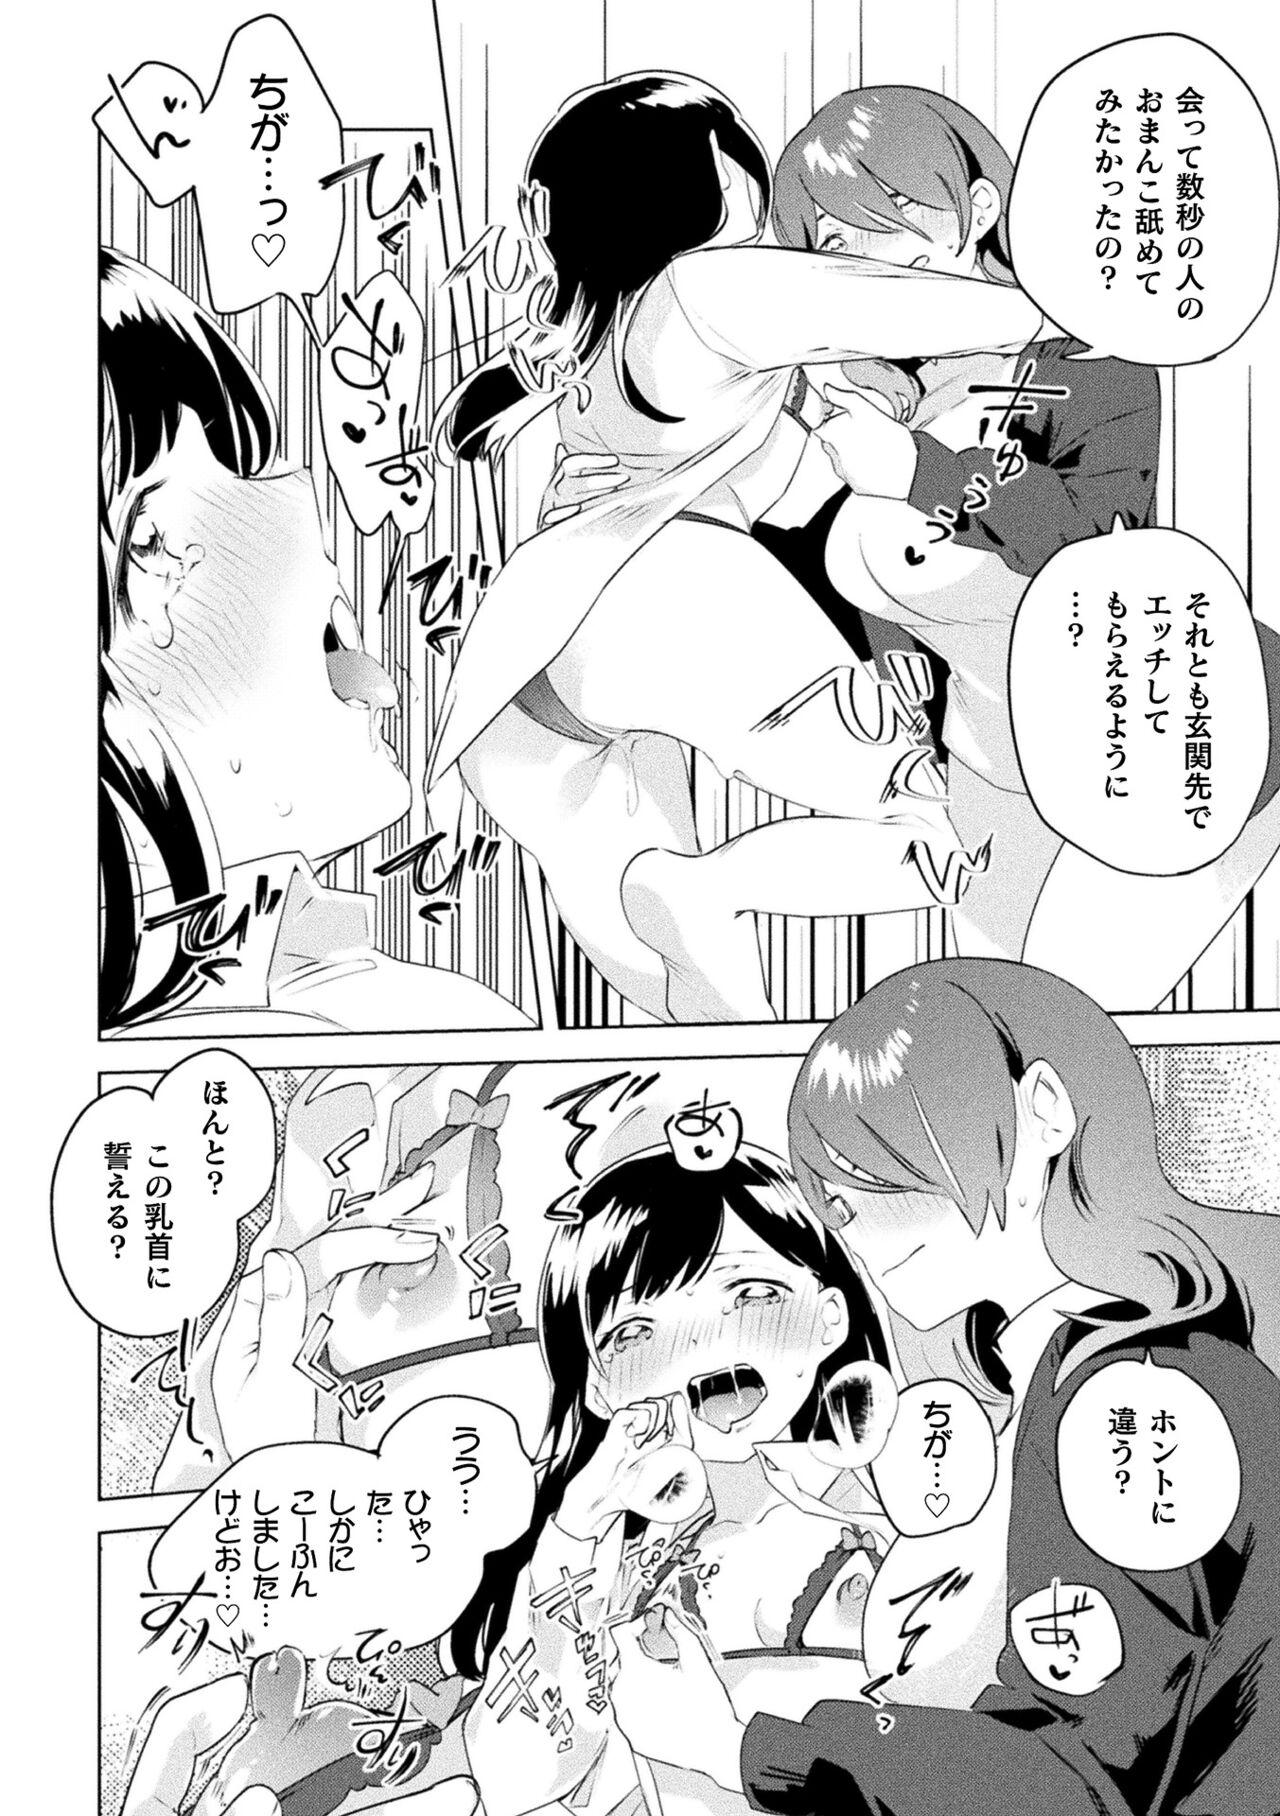 2D Comic Magazine Mamakatsu Yuri Ecchi Vol. 3 13